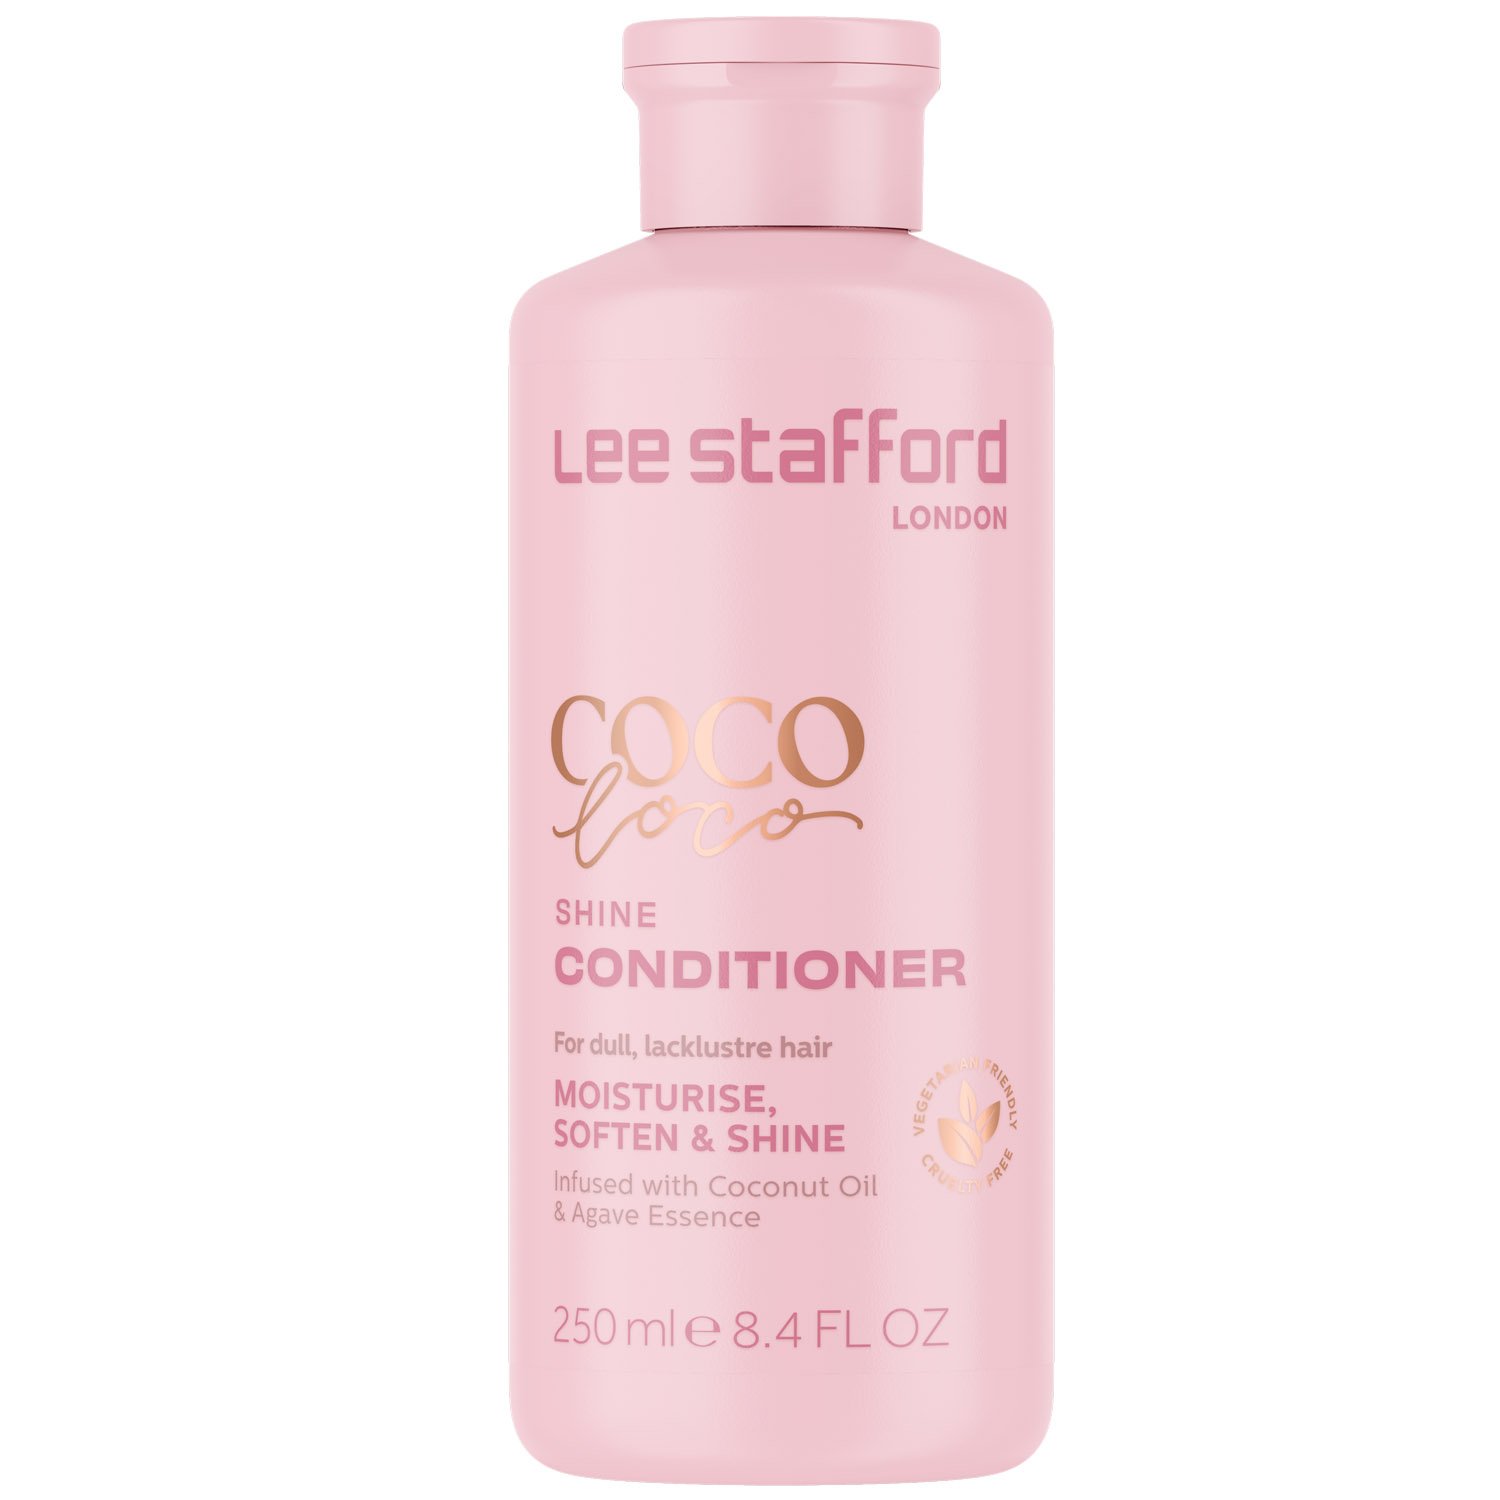 Кондиціонер для волосся Lee Stafford Сосо Loco Shine Conditioner 250 мл - фото 1